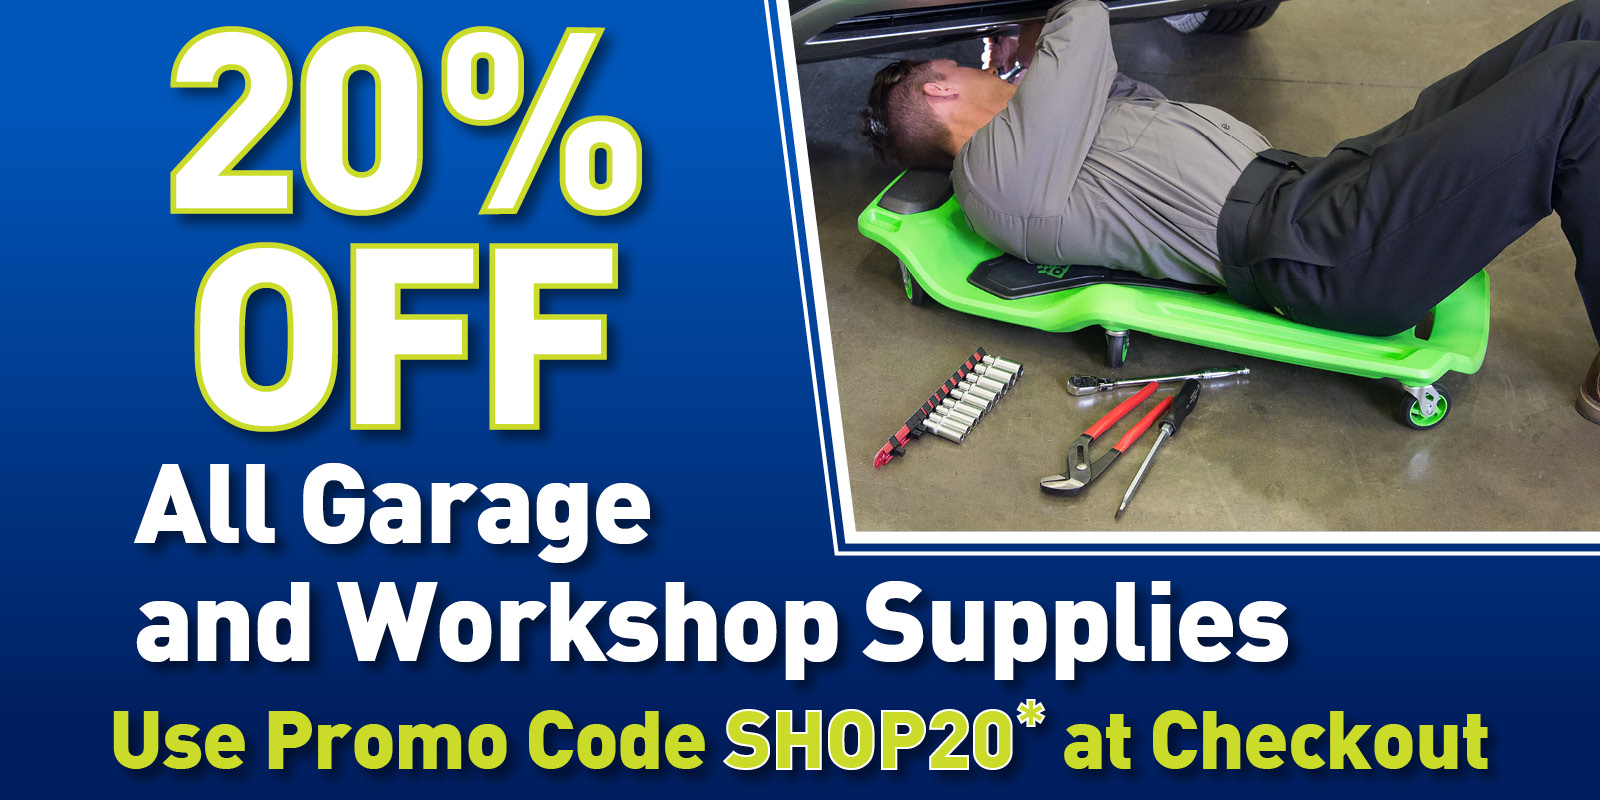 20% OFF All Garage and Workshop Supplies